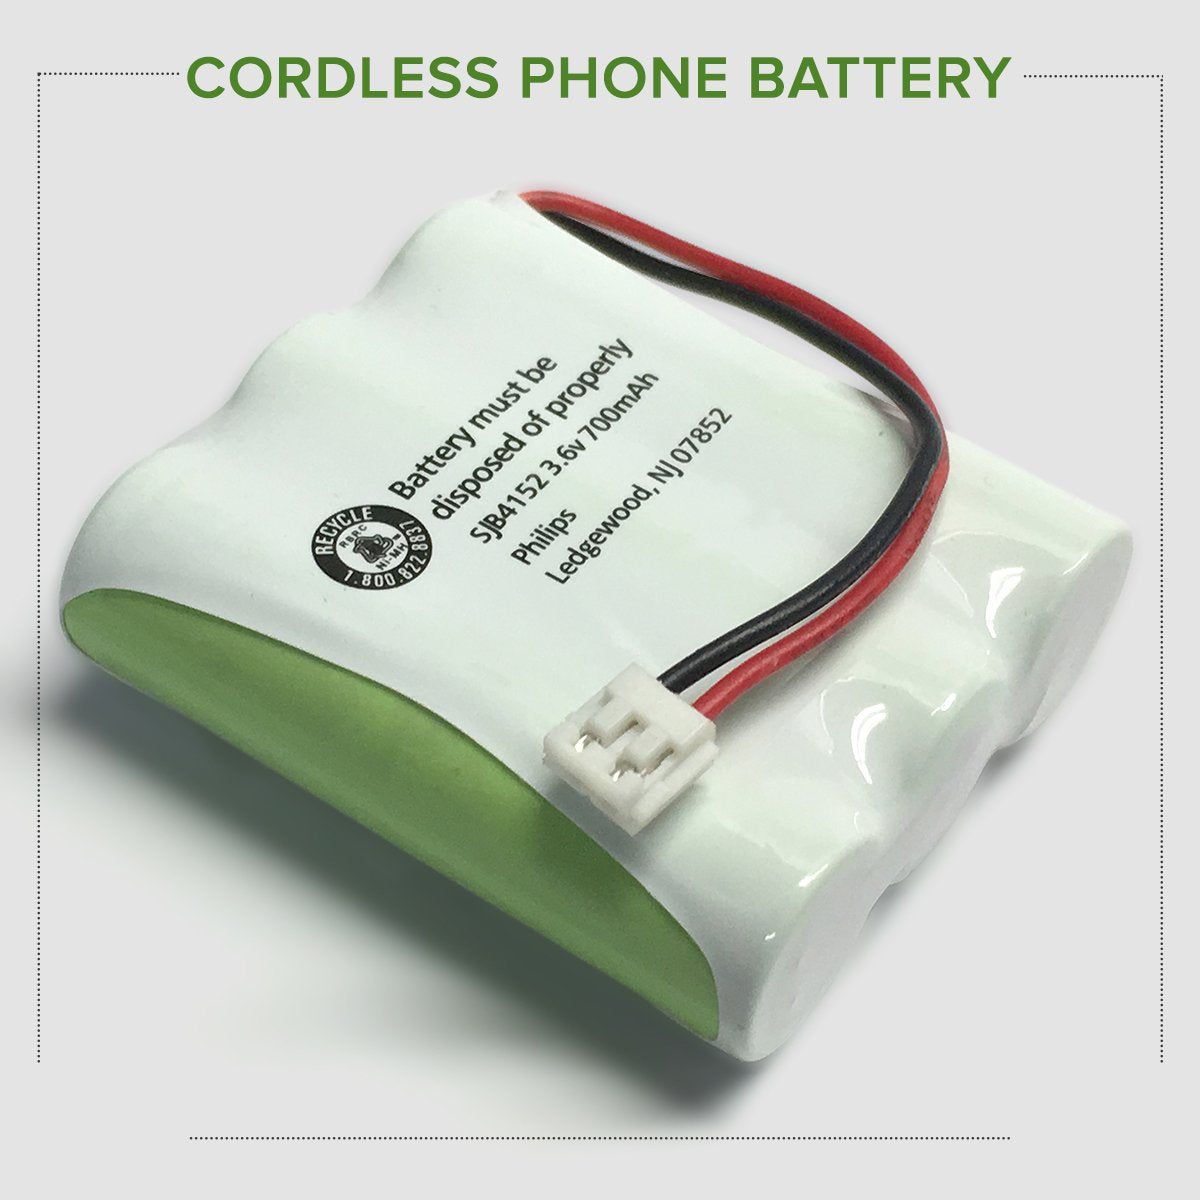 Sony SPP-61 Cordless Phone Battery